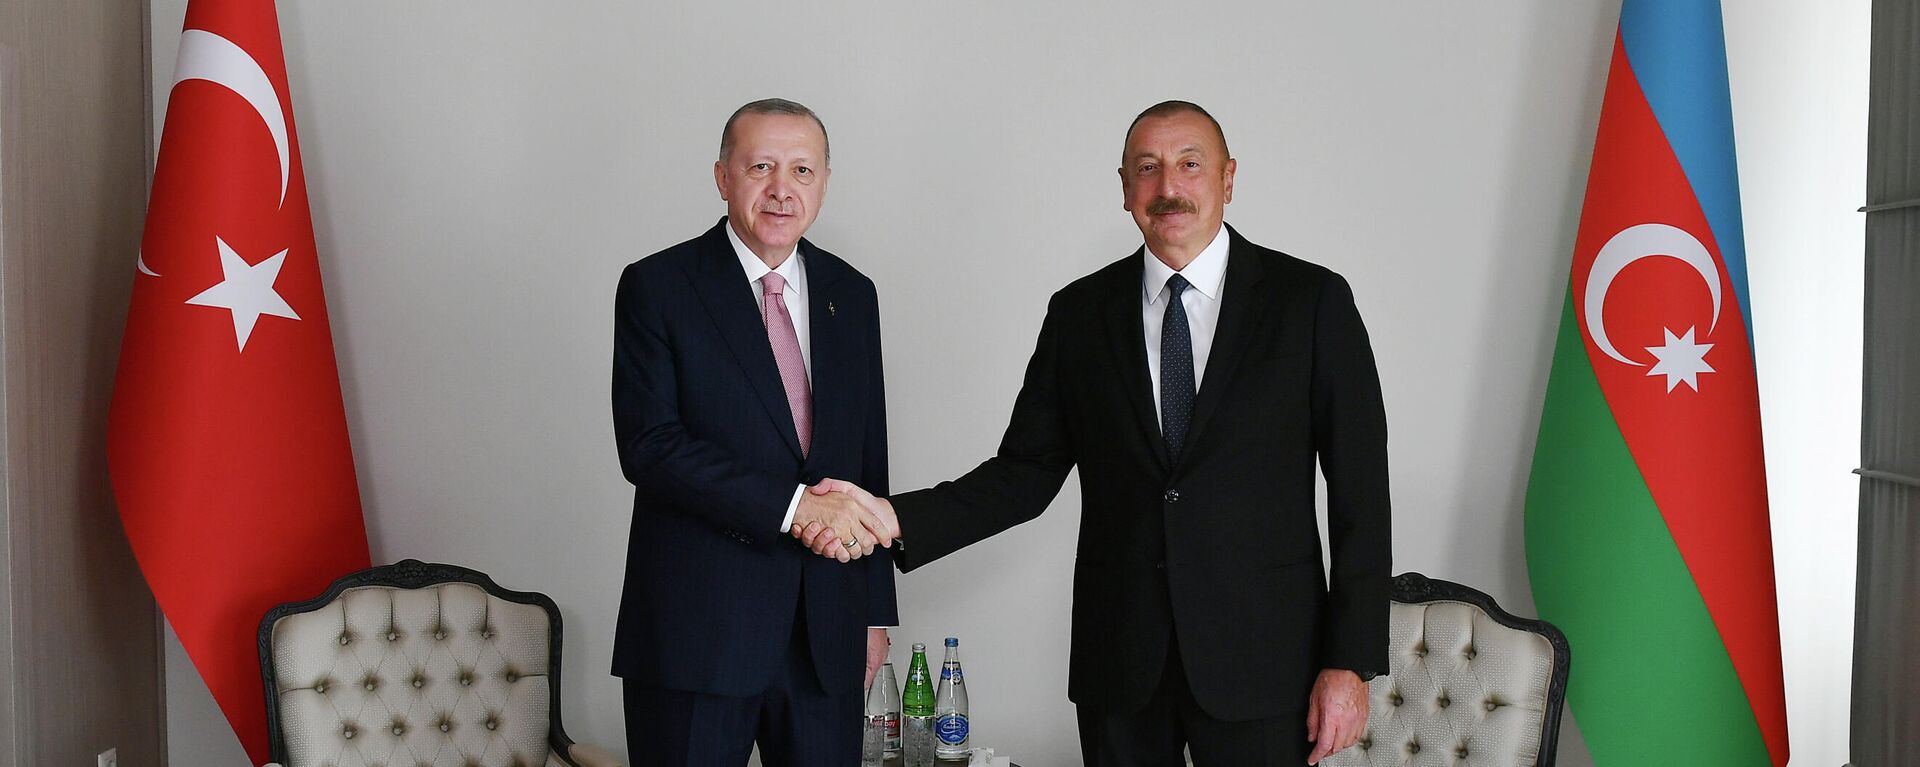 Recep Tayyip Erdogan, el presidente de Turquía (izqda.), con su homólogo azerí, Ilham Iliyev  (dcha.)  - Sputnik Mundo, 1920, 19.12.2022